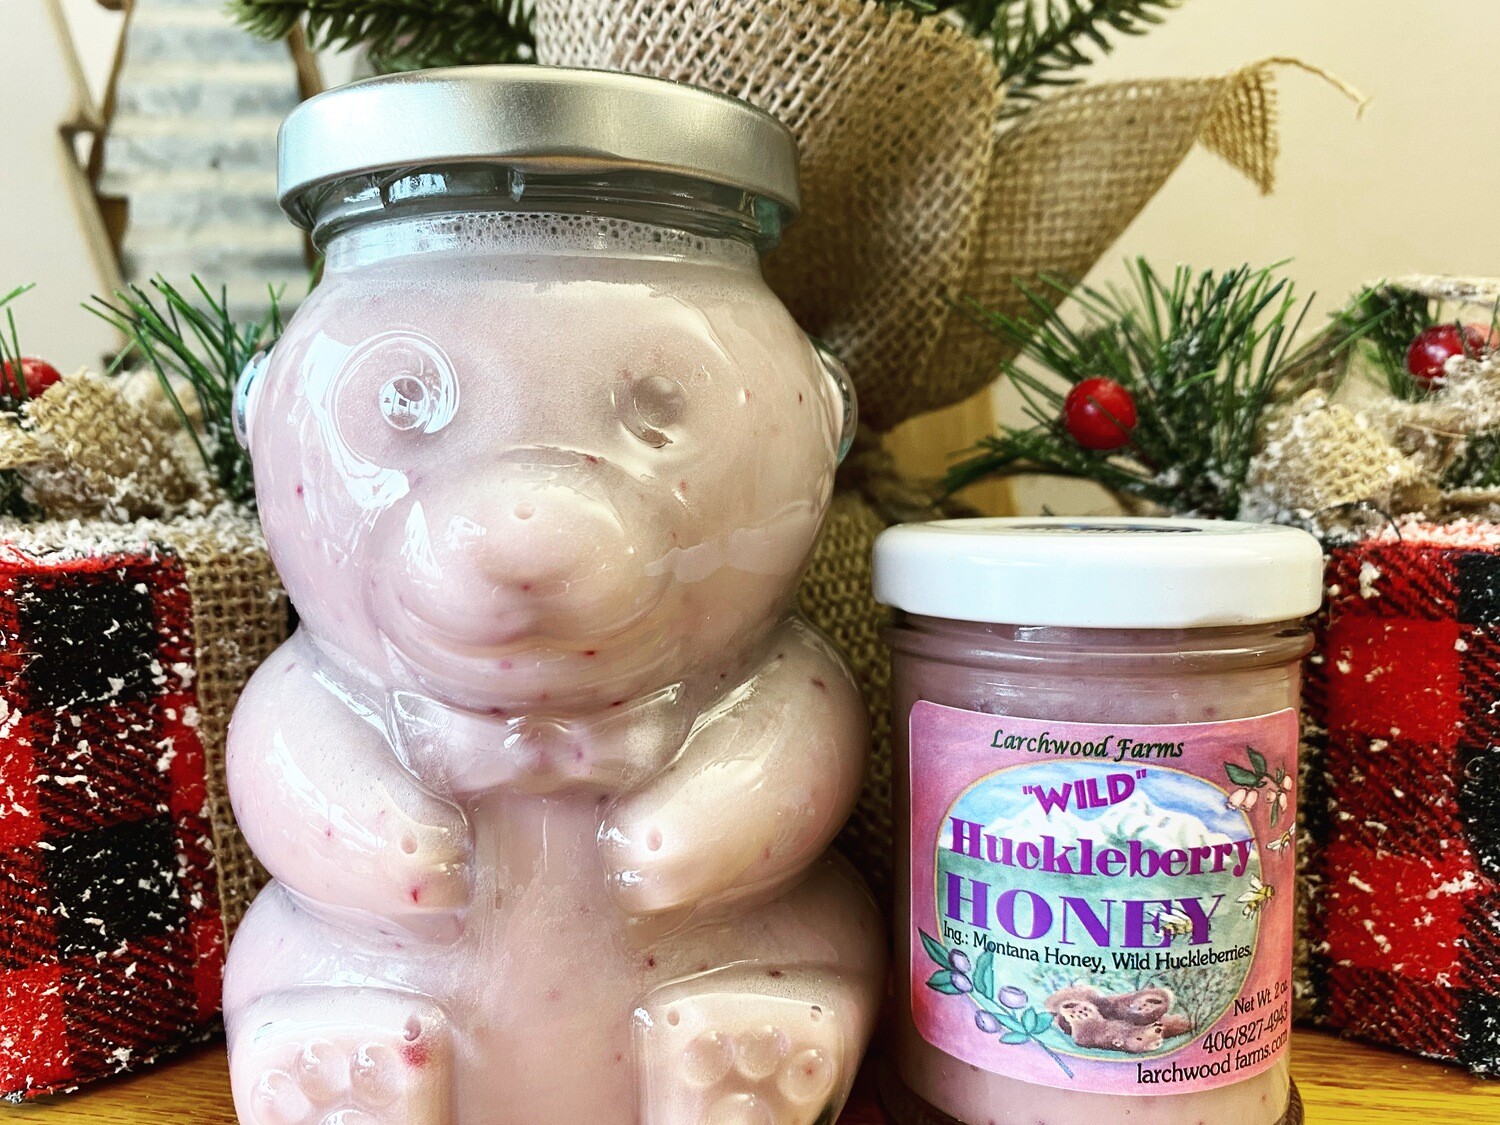 Huckleberry Creme Honey Bear